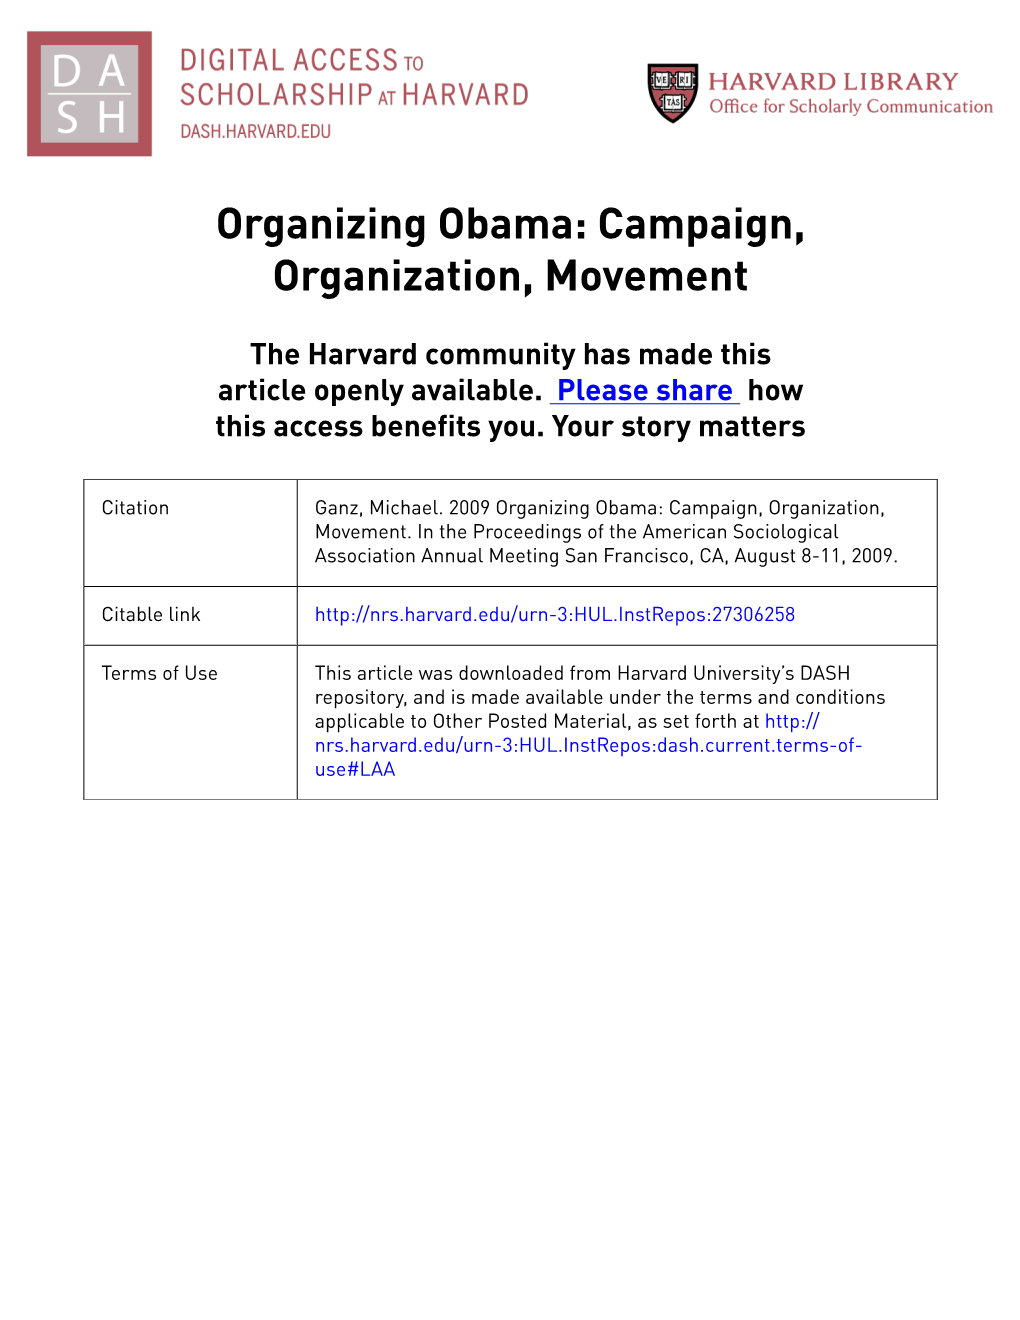 Organizing Obama: Campaign, Organization, Movement